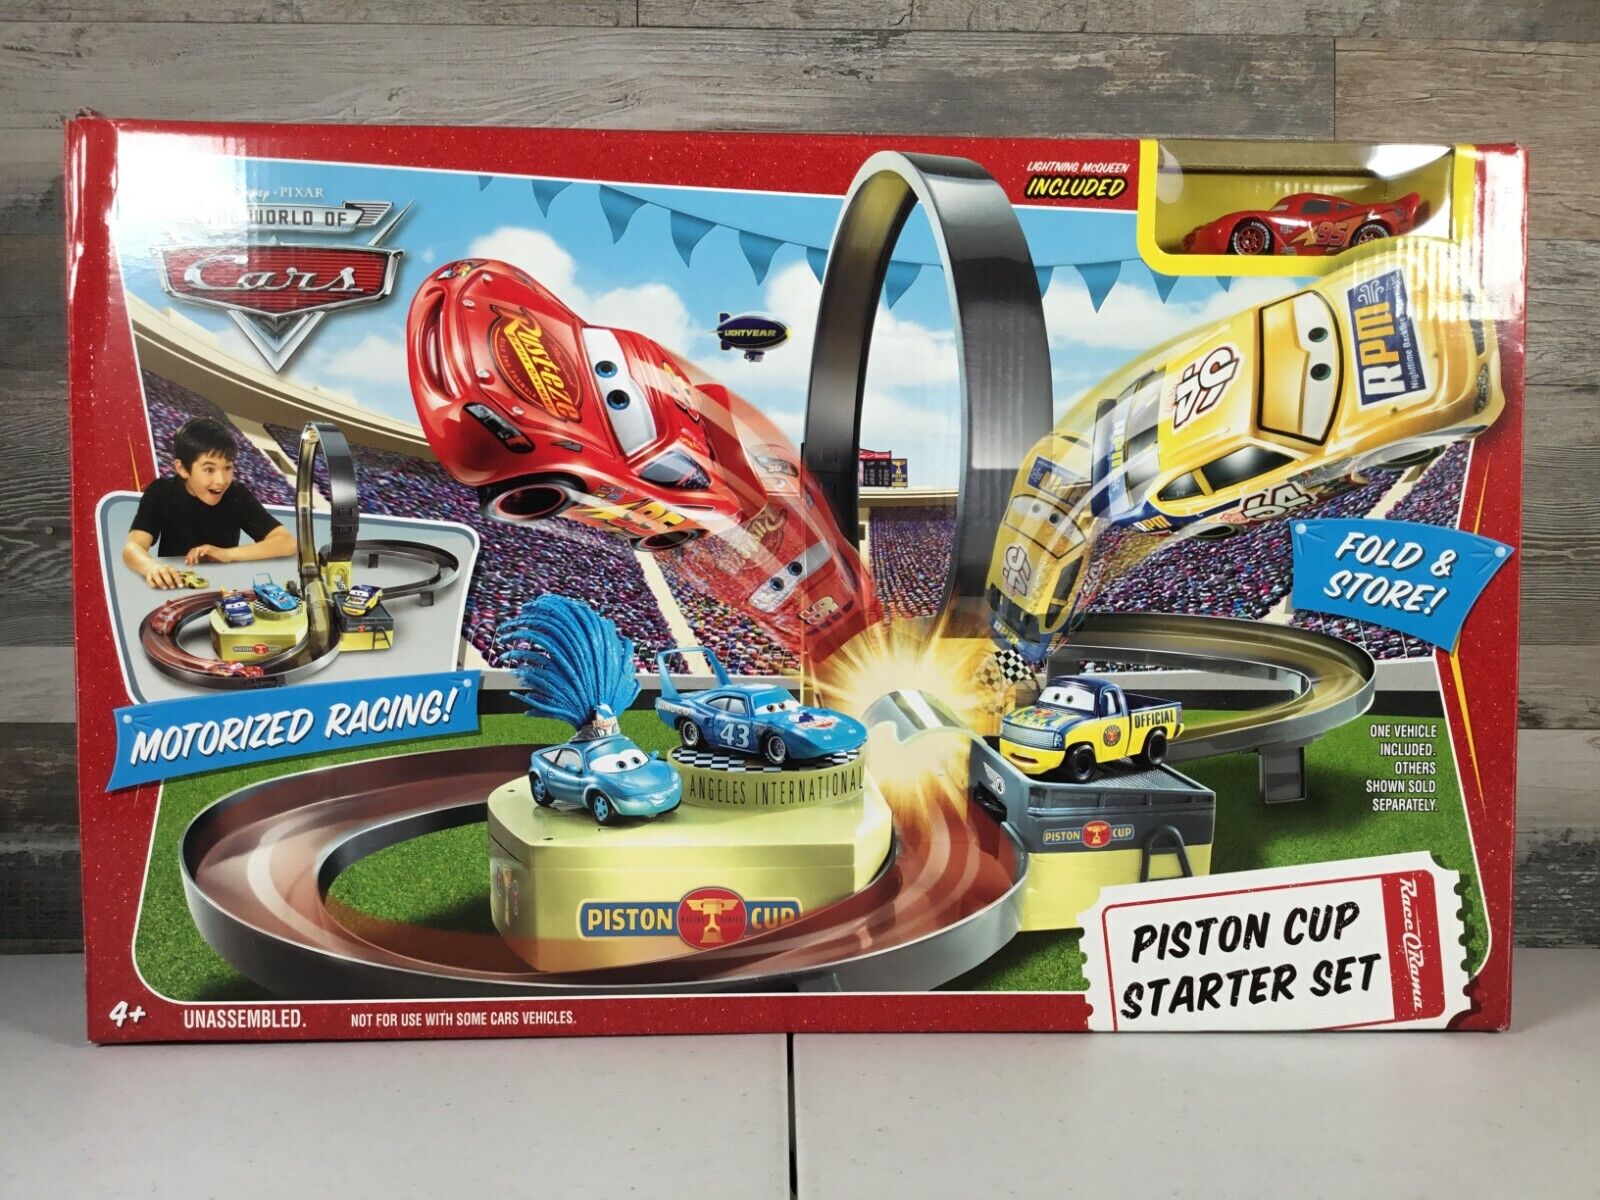 Disney Pixar Cars Piston Cup Starter Set Motorized Racing Fold & Store CARS102